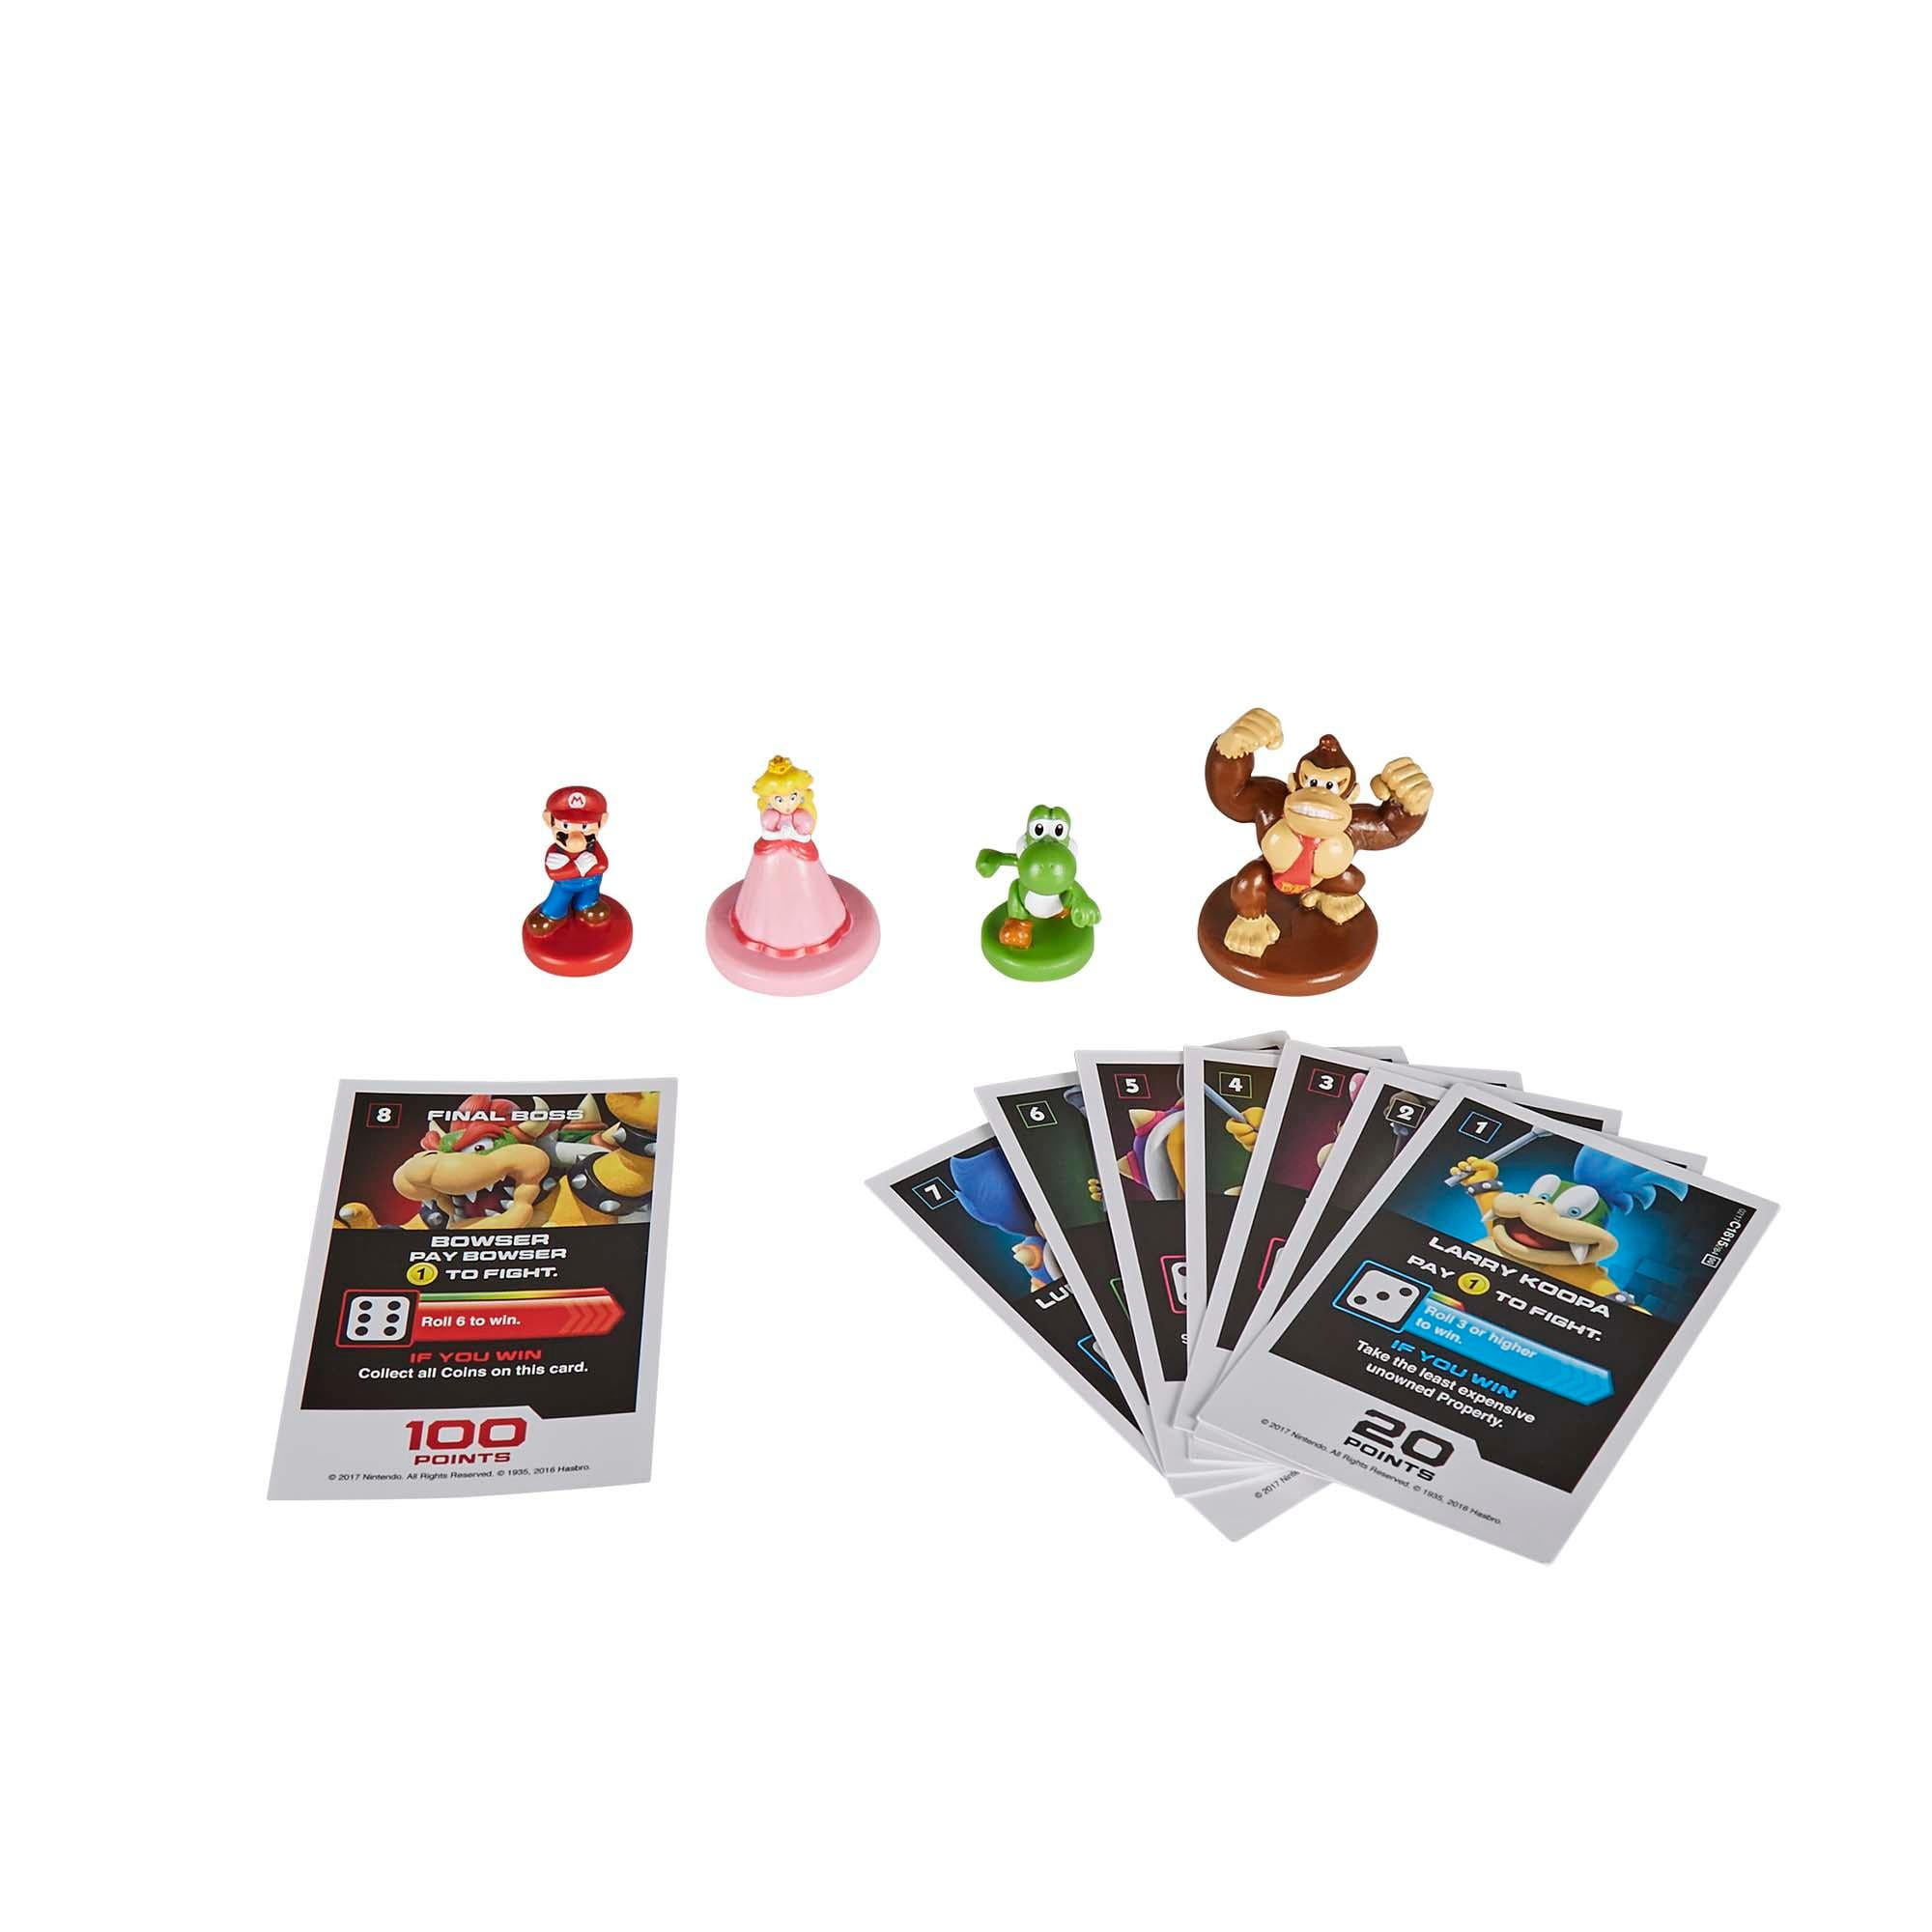 Super Mario Bros Monopoly Gamer Premium Edition Board Game Hasbro feat  Bowser